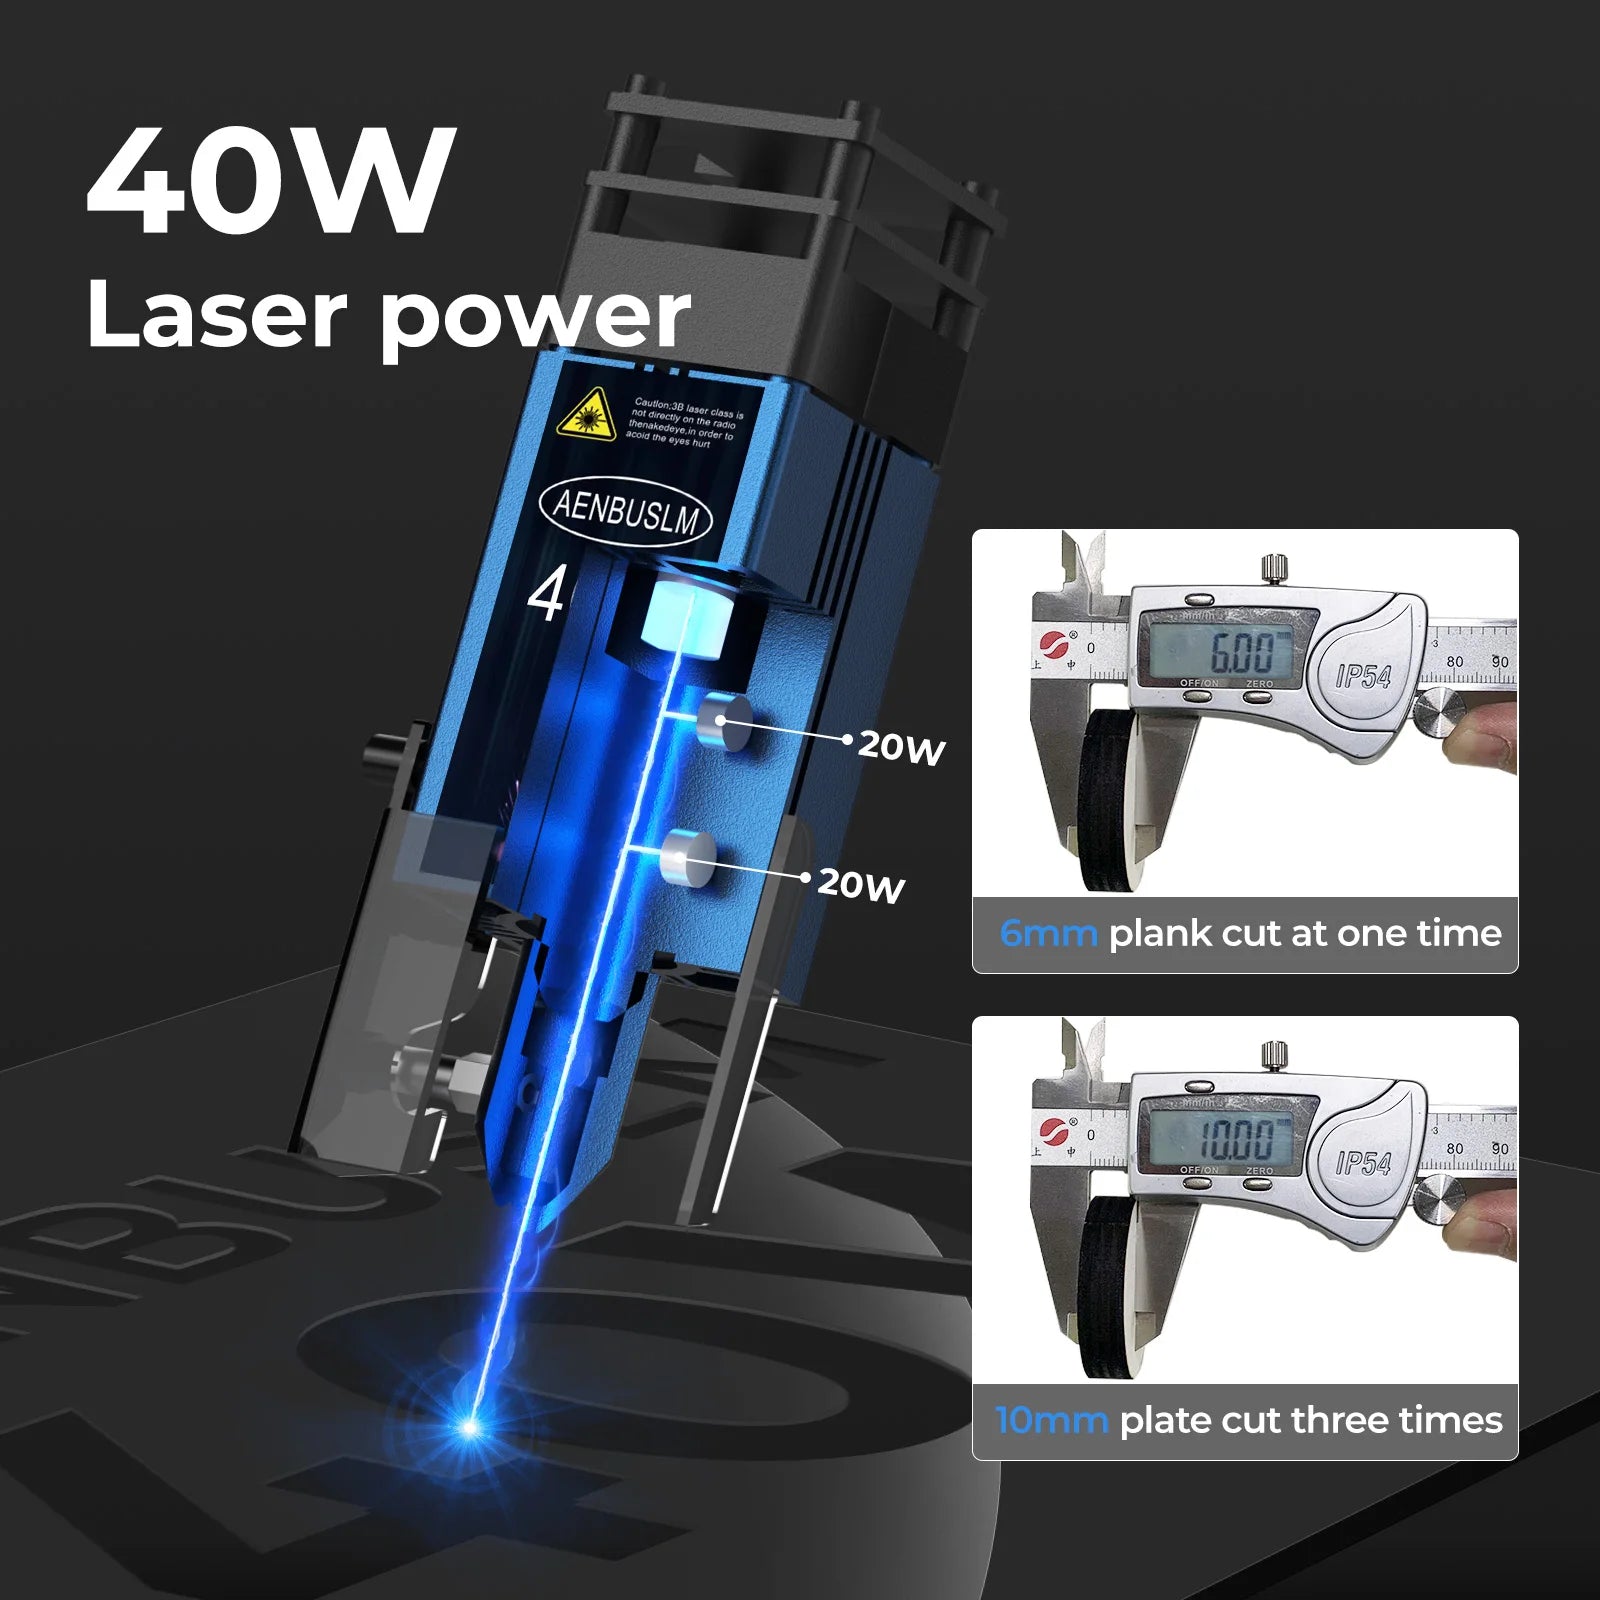 AENBUSLM 40W CNC Laser Engraver Lazer Engraving Head Air Assist for Laser Module Router Machine Engraver DIY Woodworking Tools